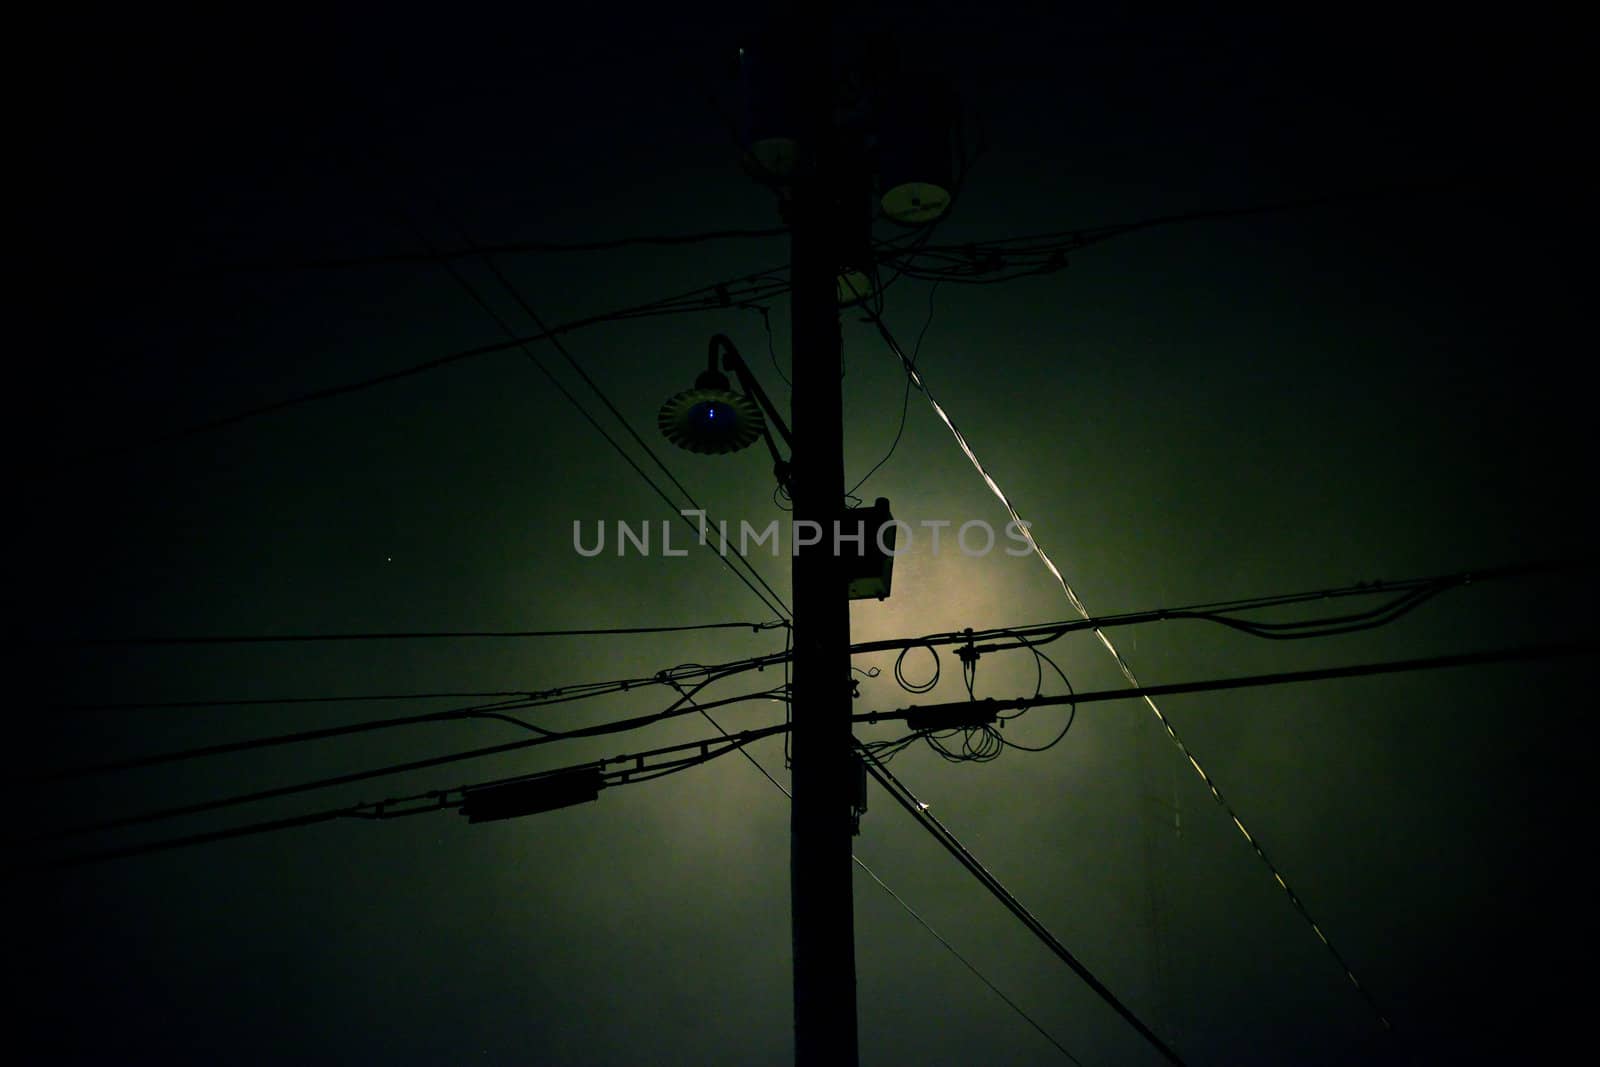 Telephone pole silhouette by edan